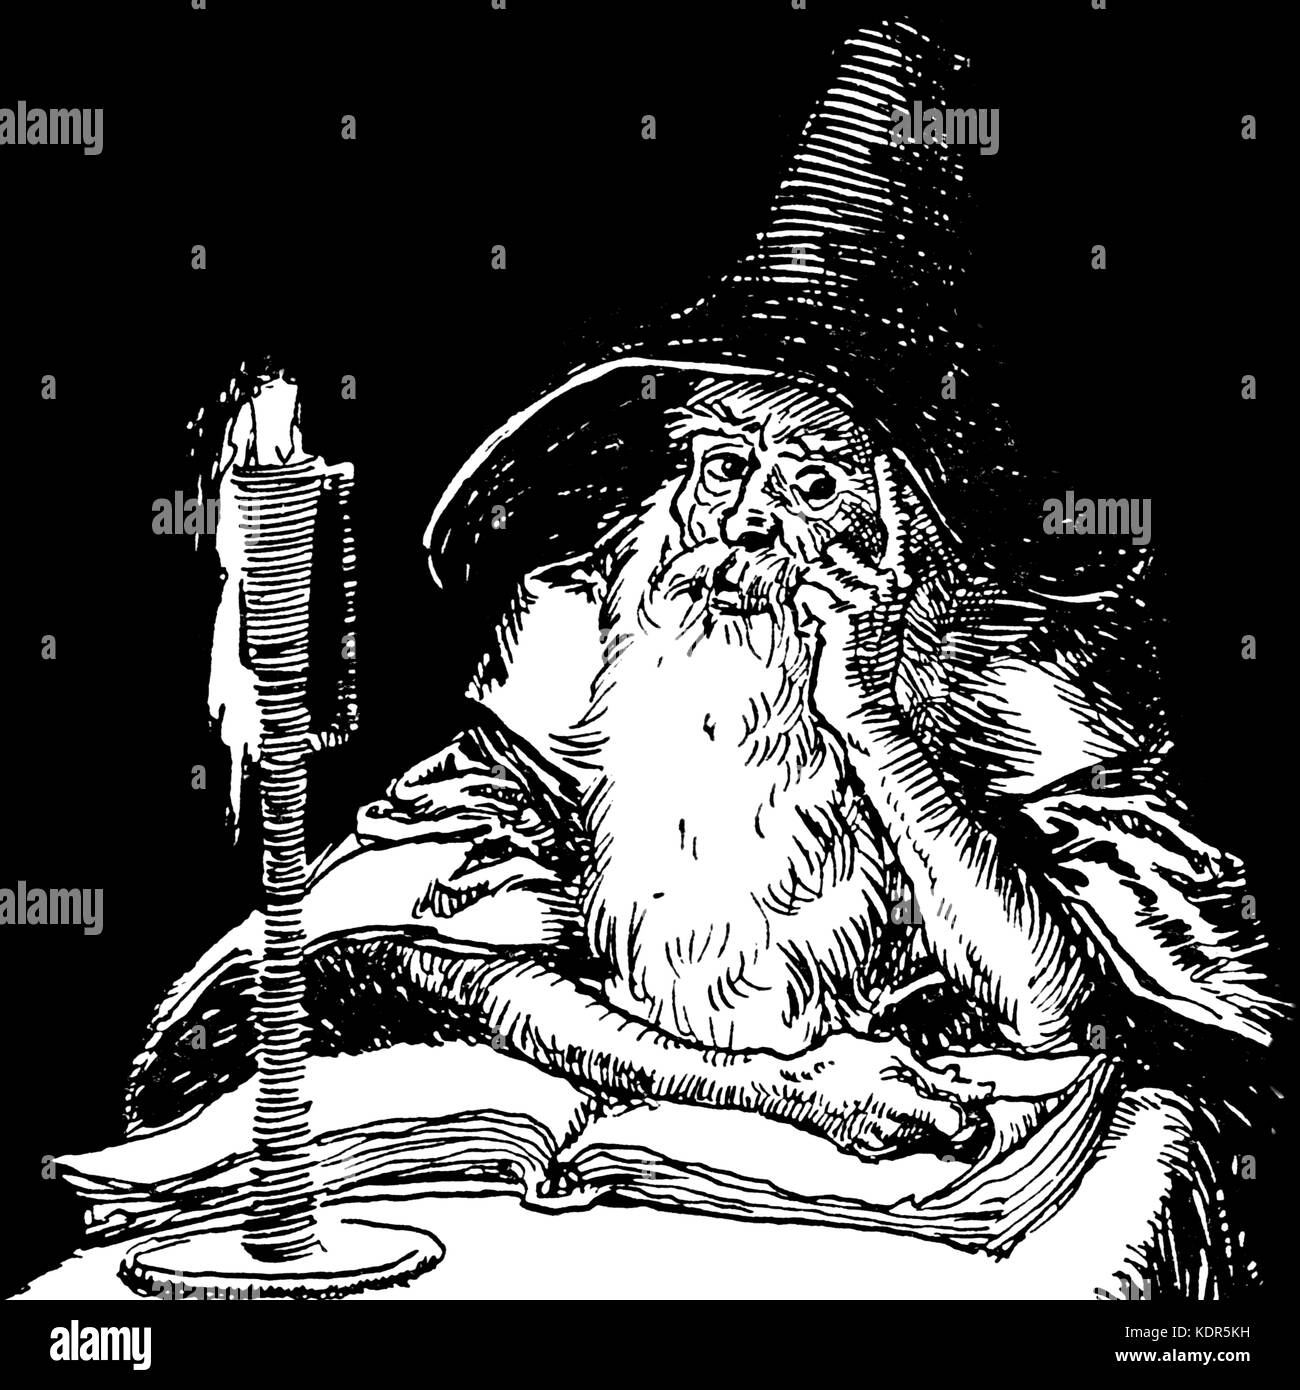 Bärtiger Fantasy-Zauberer mit Hut, großes offenes Buch, Kerze, Ratschläge geben. Stockfoto